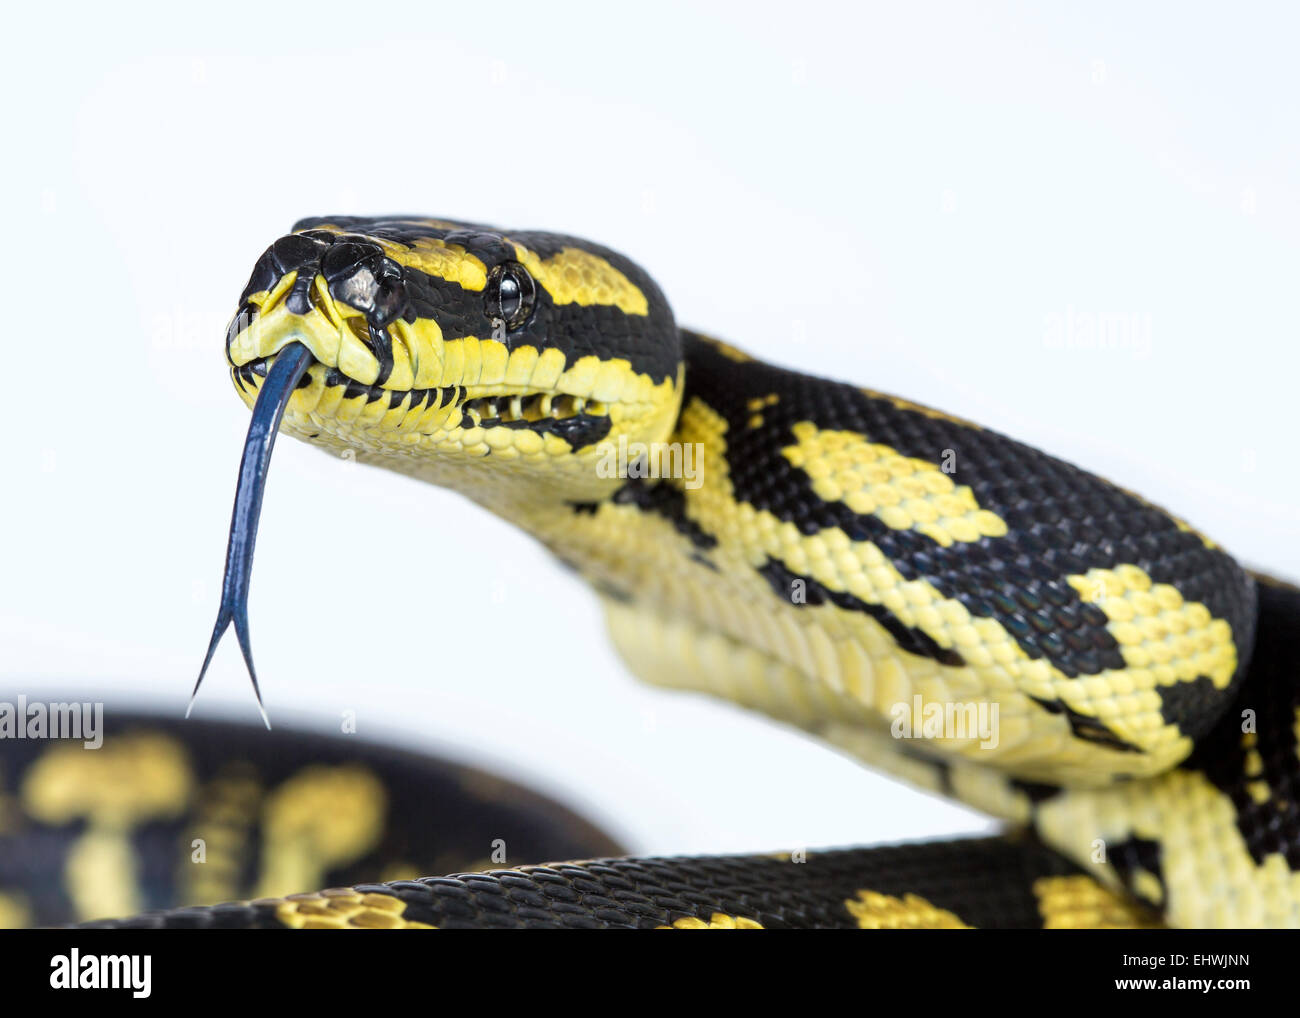 A close up of a jungle carpet python (Morelia spilota cheynei), on a white background. Stock Photo